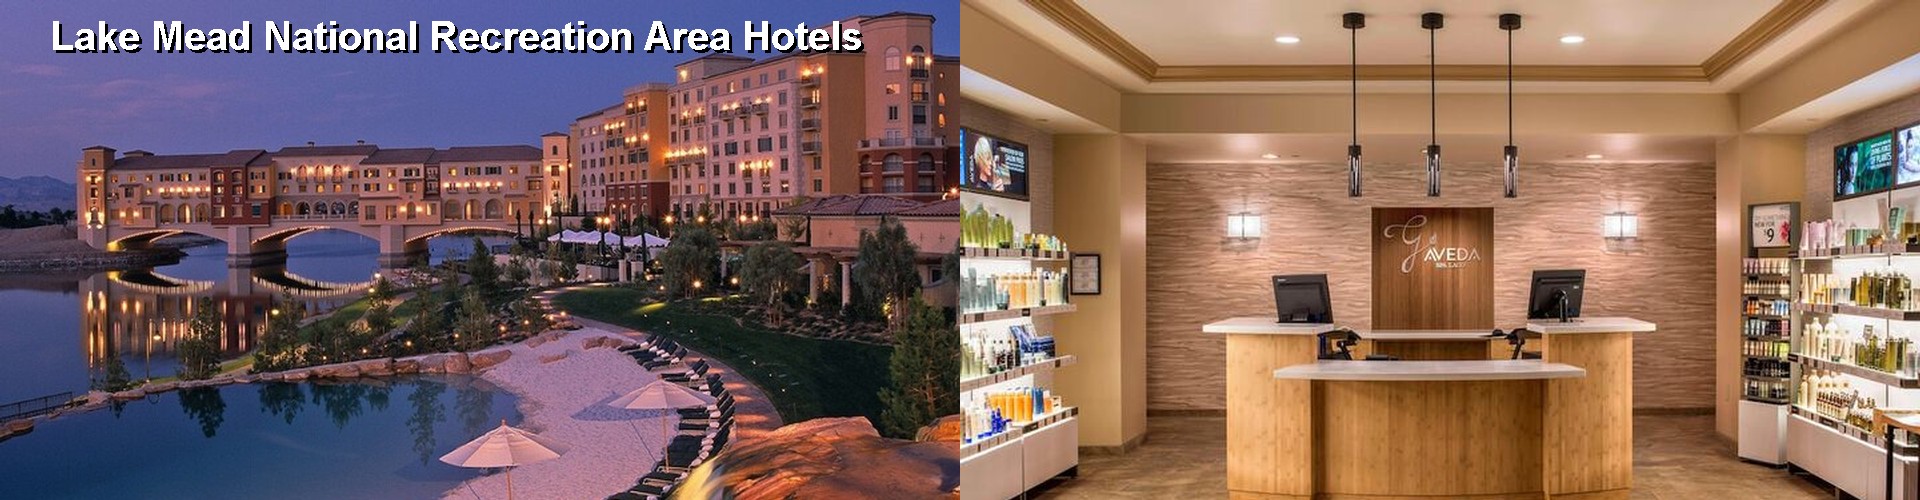 5 Best Hotels near Lake Mead National Recreation Area